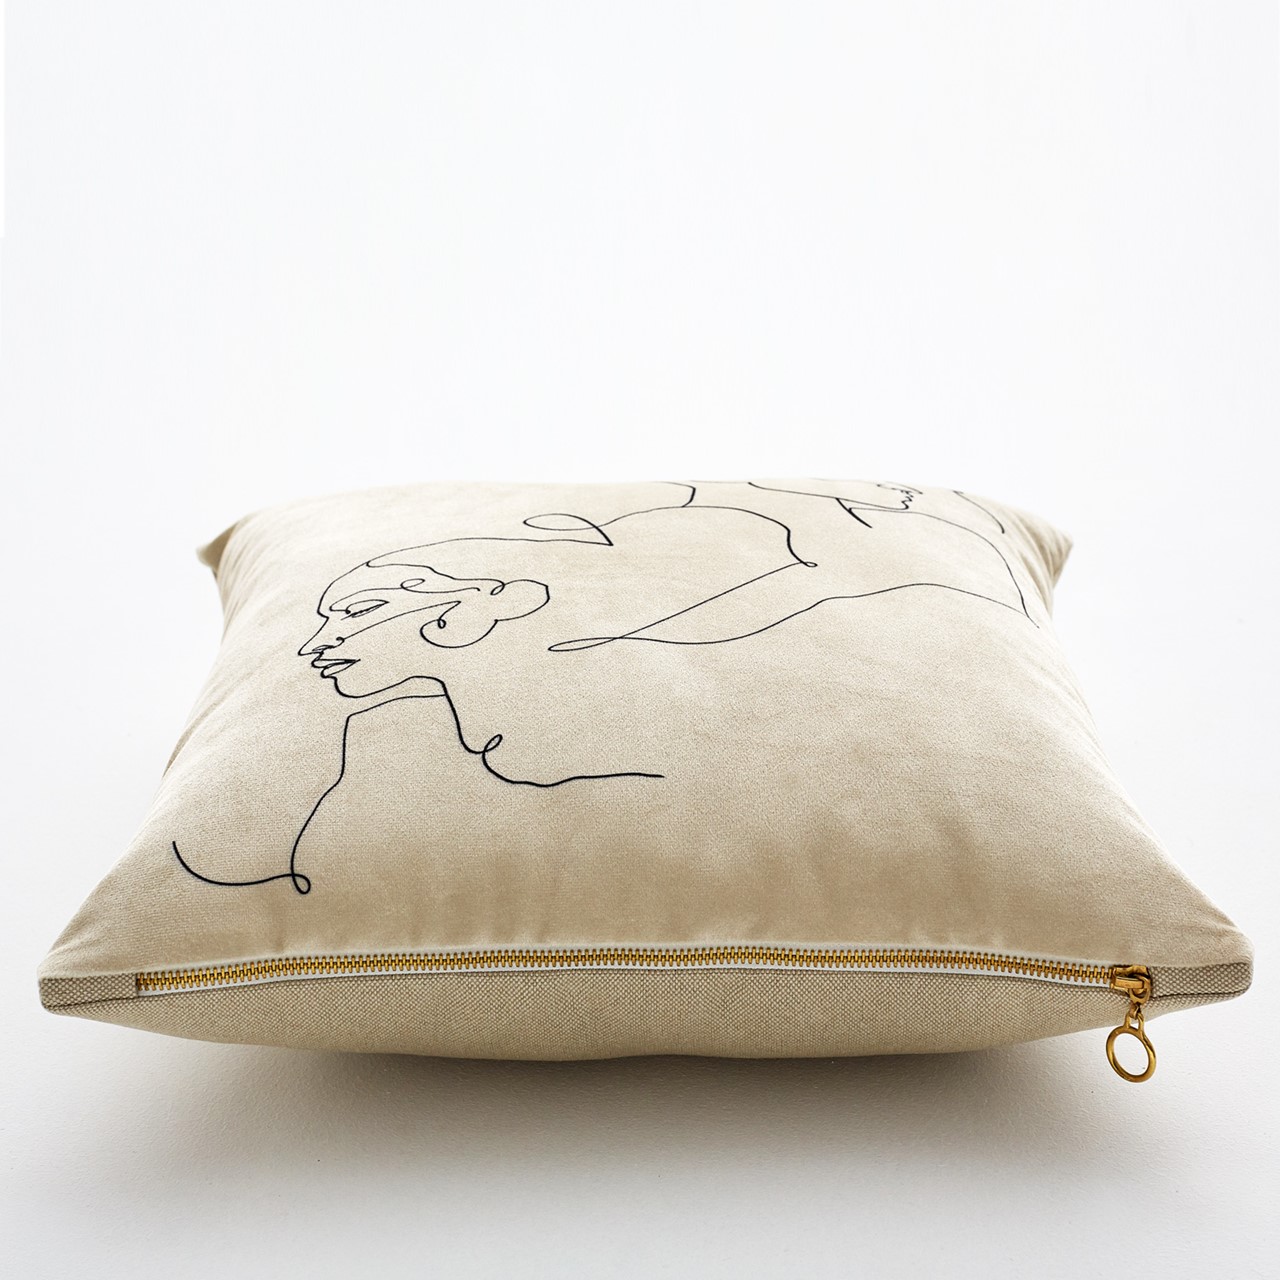 Picture of Love&Hate Cream Beige Velvet Pillow